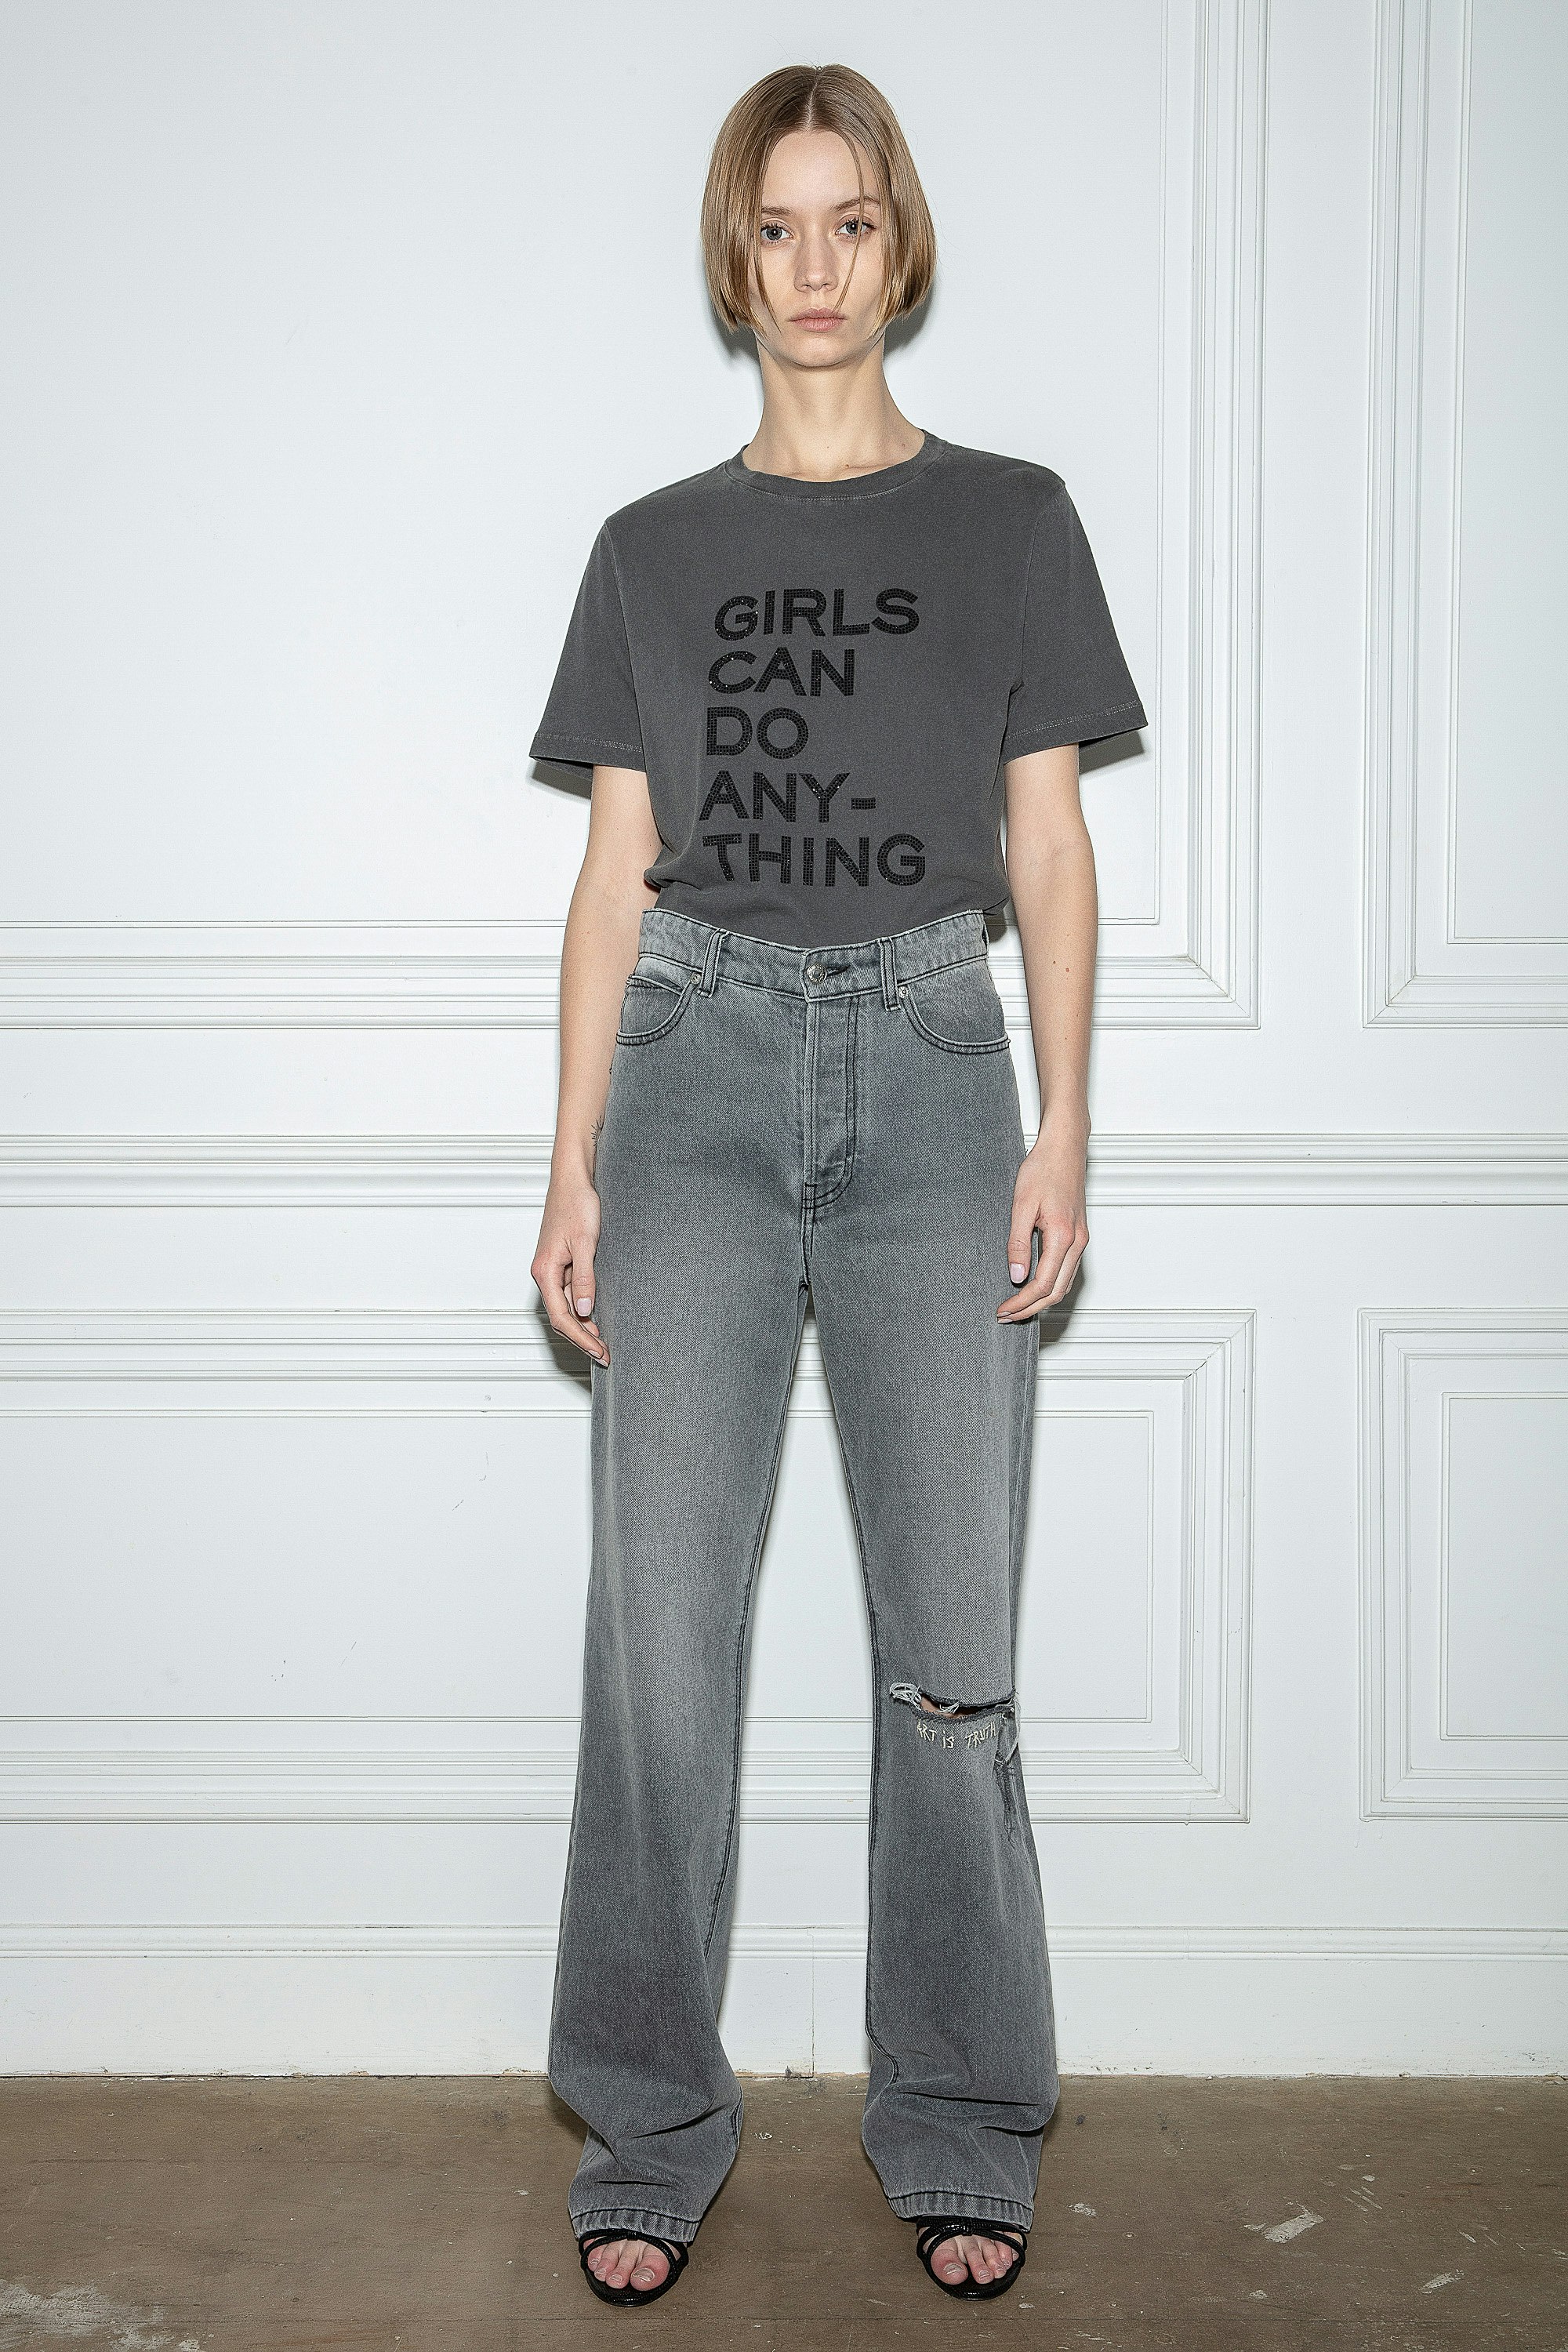 Bella T-shirt Women’s grey cotton T-shirt with rhinestone-studded “Girls can do anything” slogan